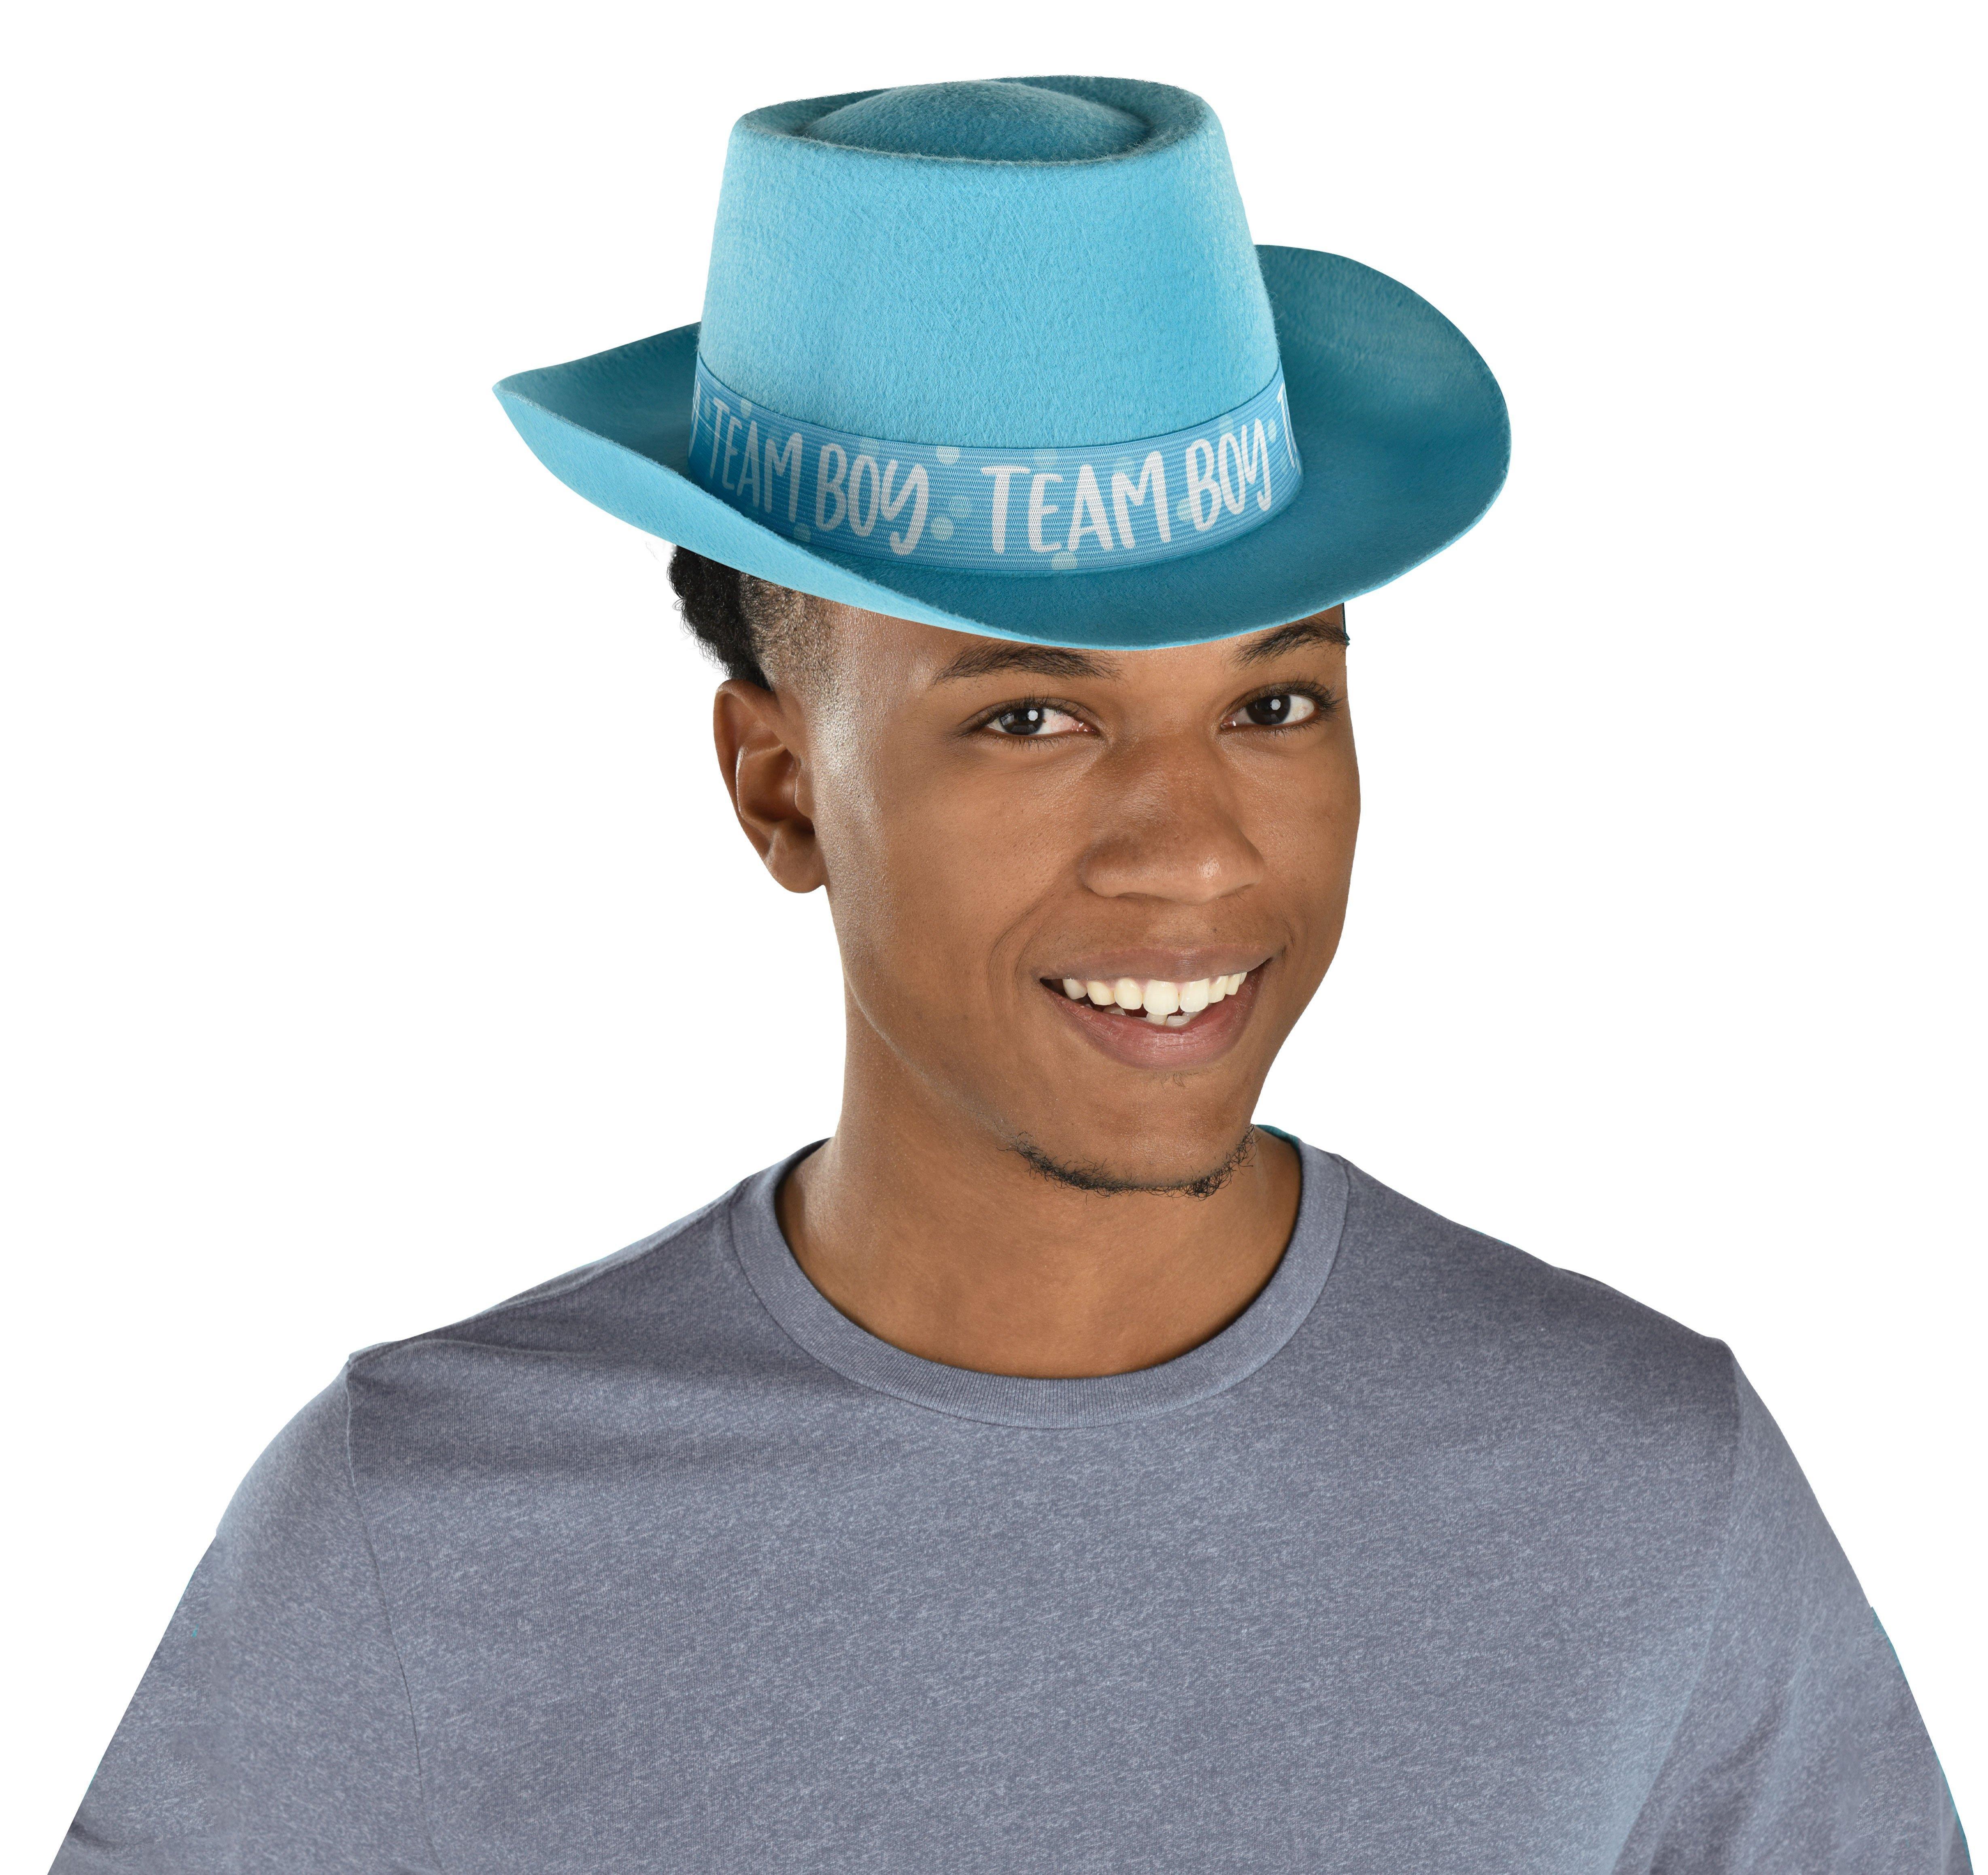 Blue Team Boy Gender Reveal Felt Cowboy Hat - The Big Reveal